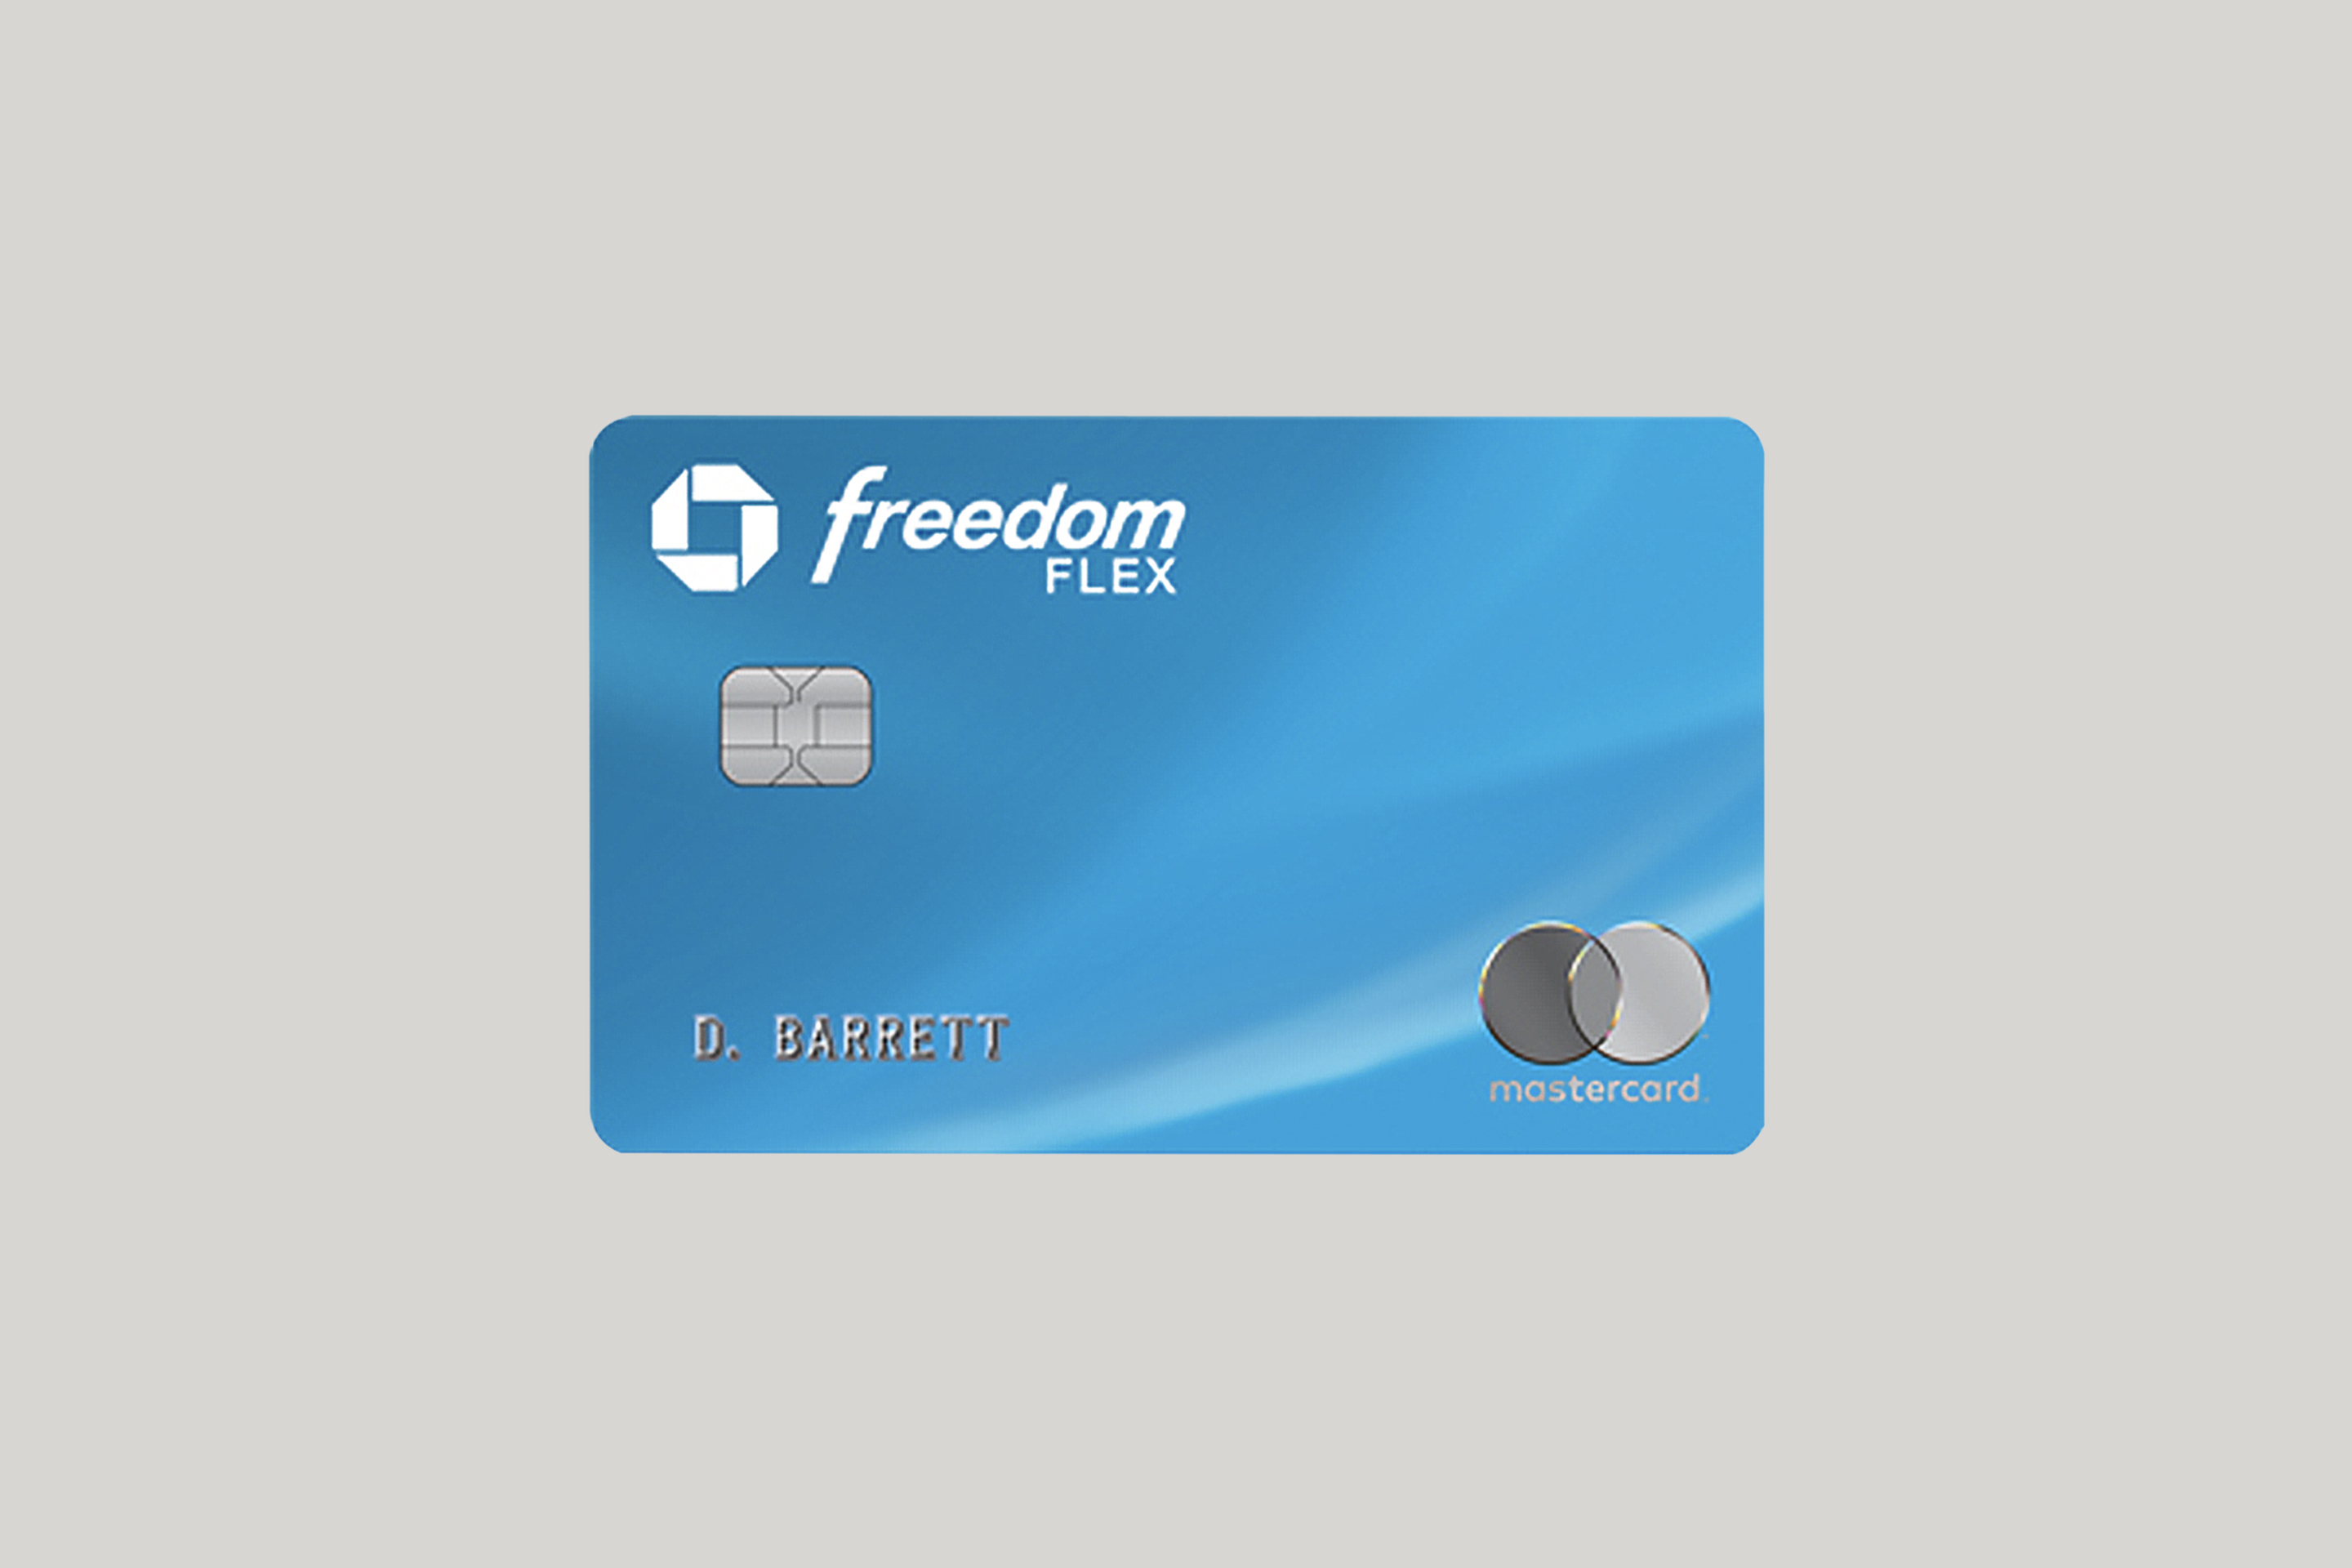 Chase Freedom Flexâ Credit Card